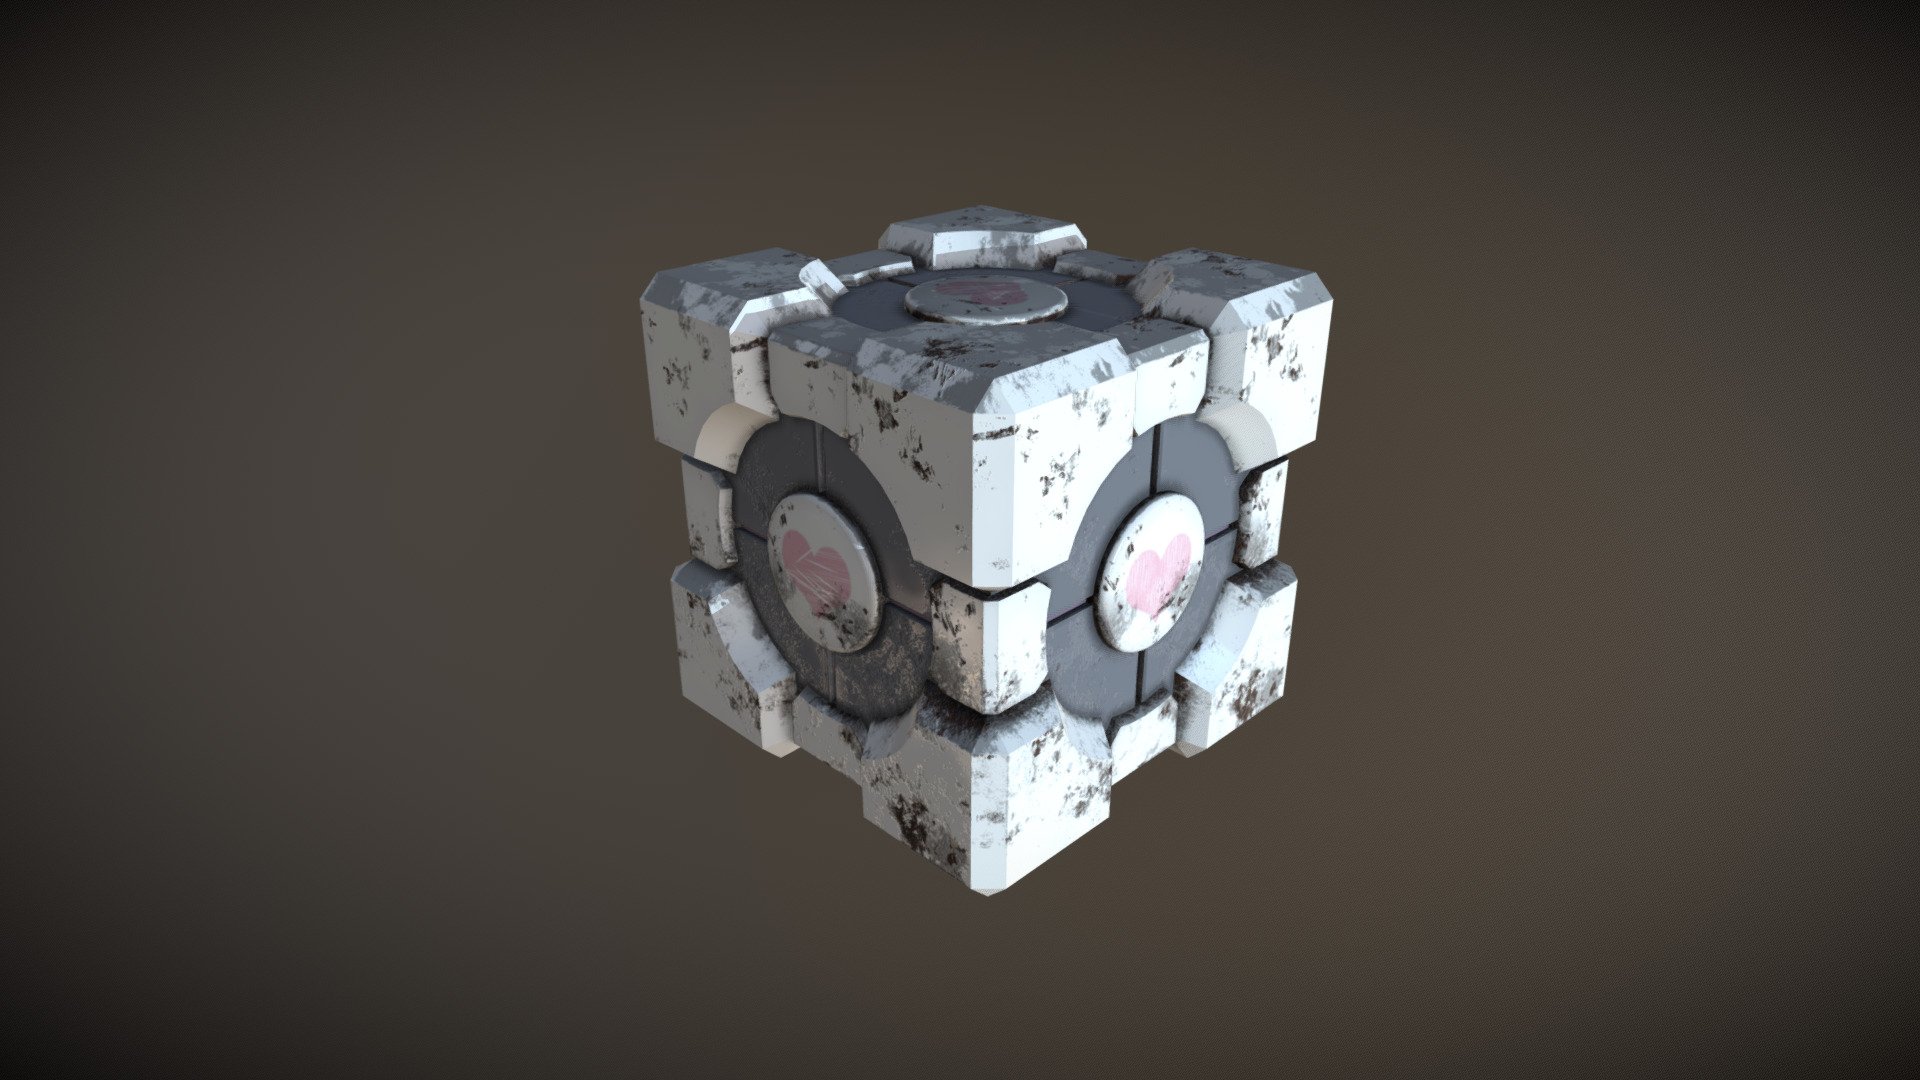 "The Lonley Cube" - Portal Companion Cube